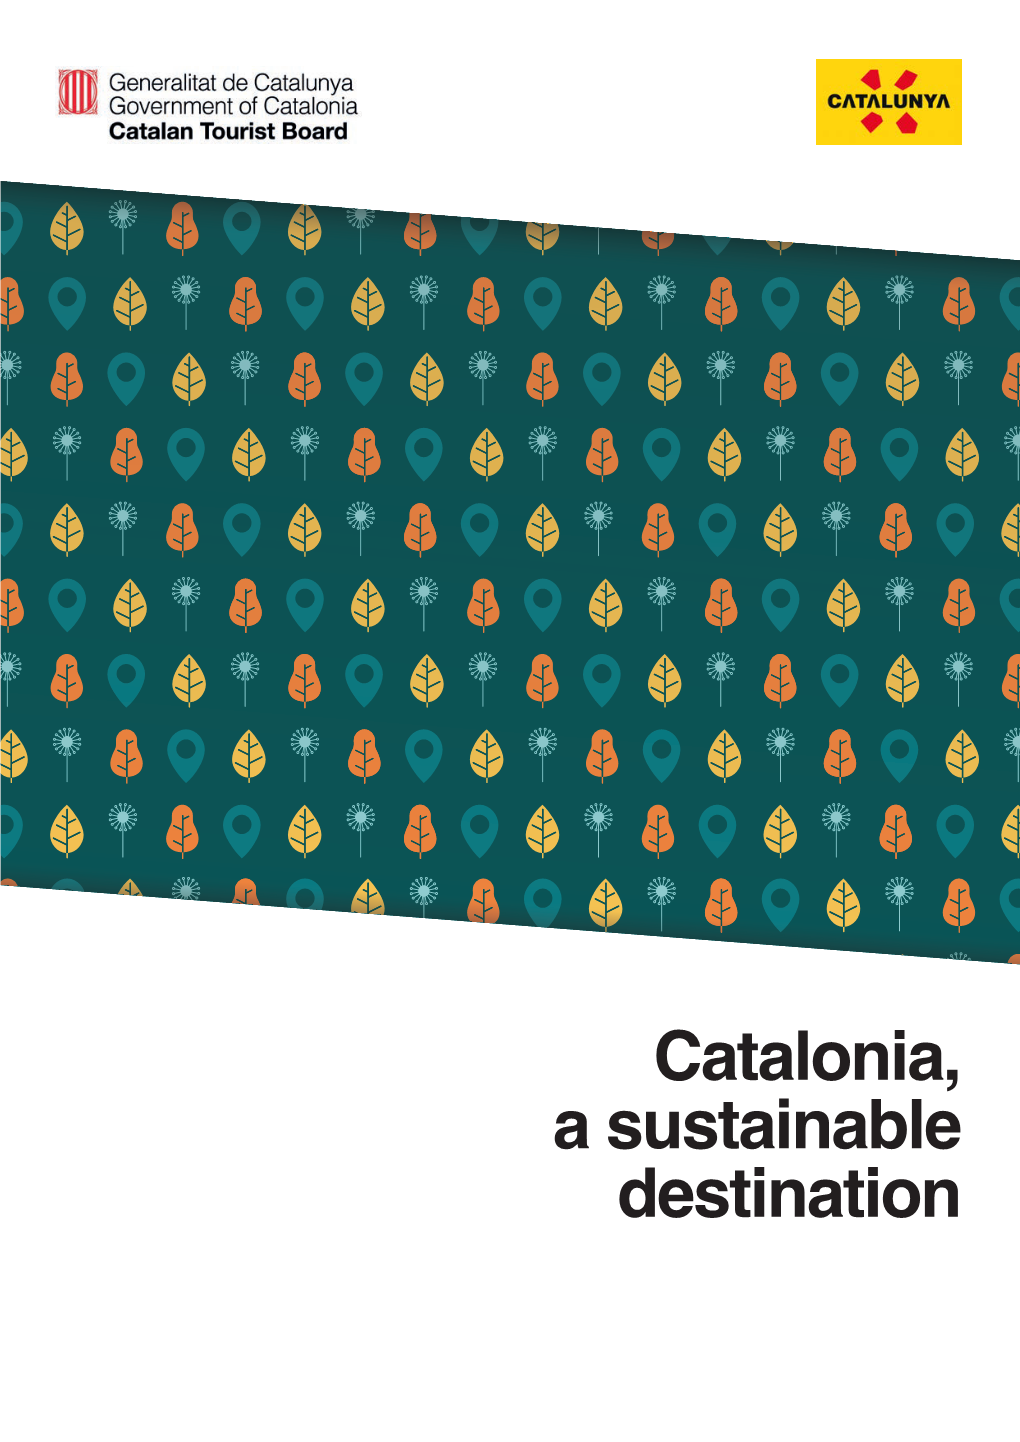 Catalonia, a Sustainable Destination 1 Index